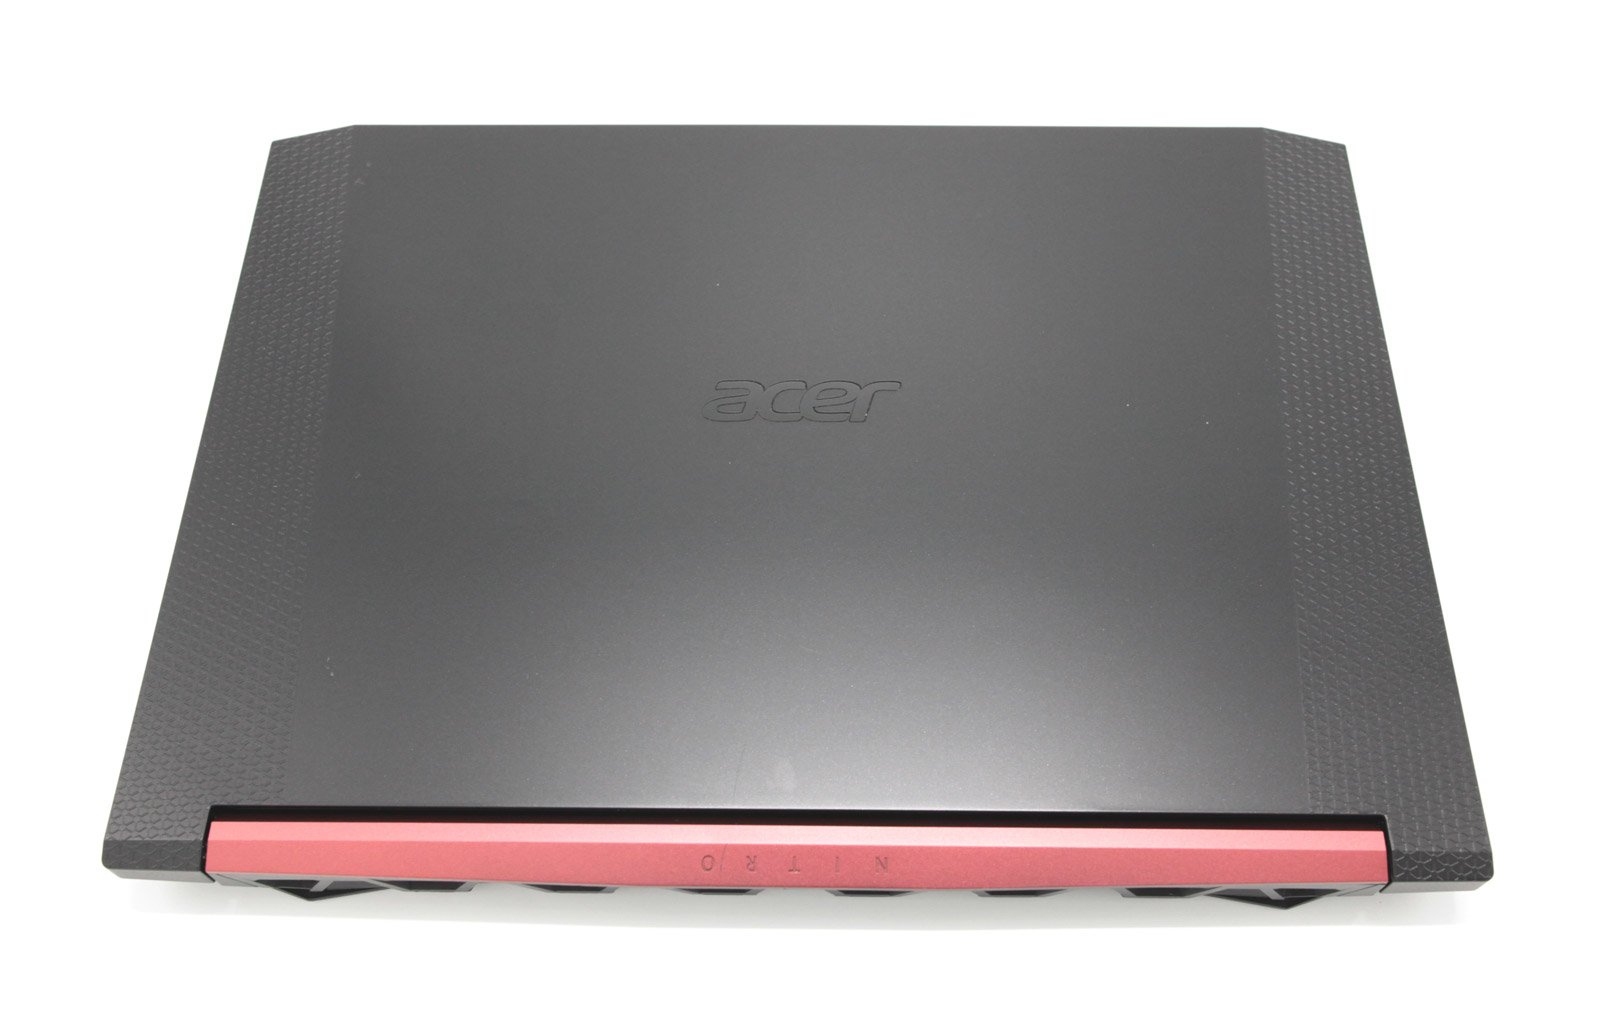 Acer Nitro 5 15.6" Gaming Laptop: Core i7 9750H, 8GB RAM, 512GB SSD, GTX 1650 - CruiseTech